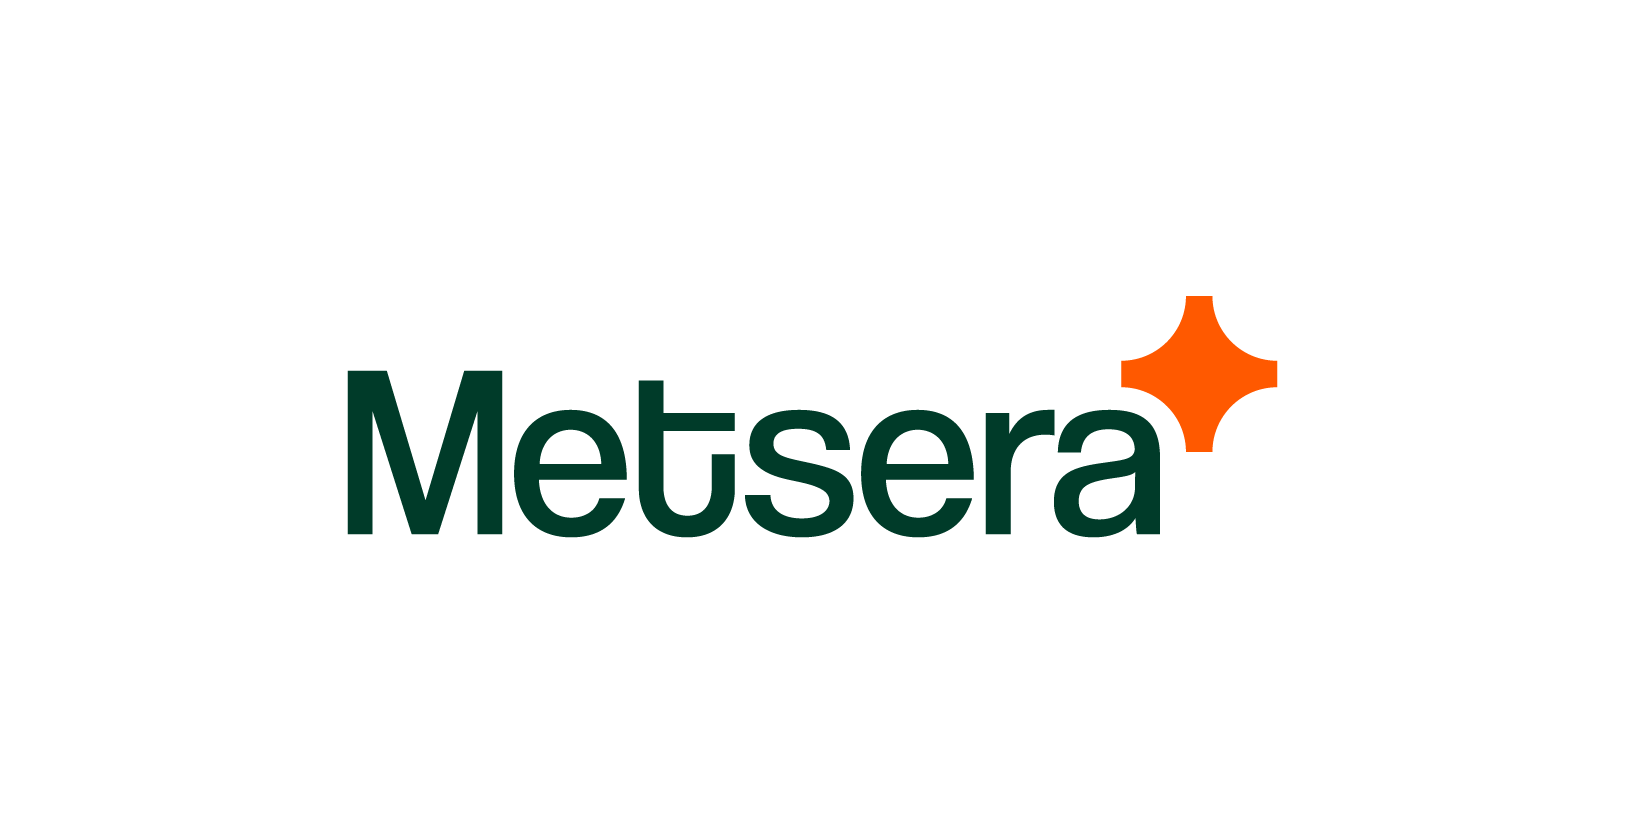 Vision Fund investment portfolio company Metsera's logo